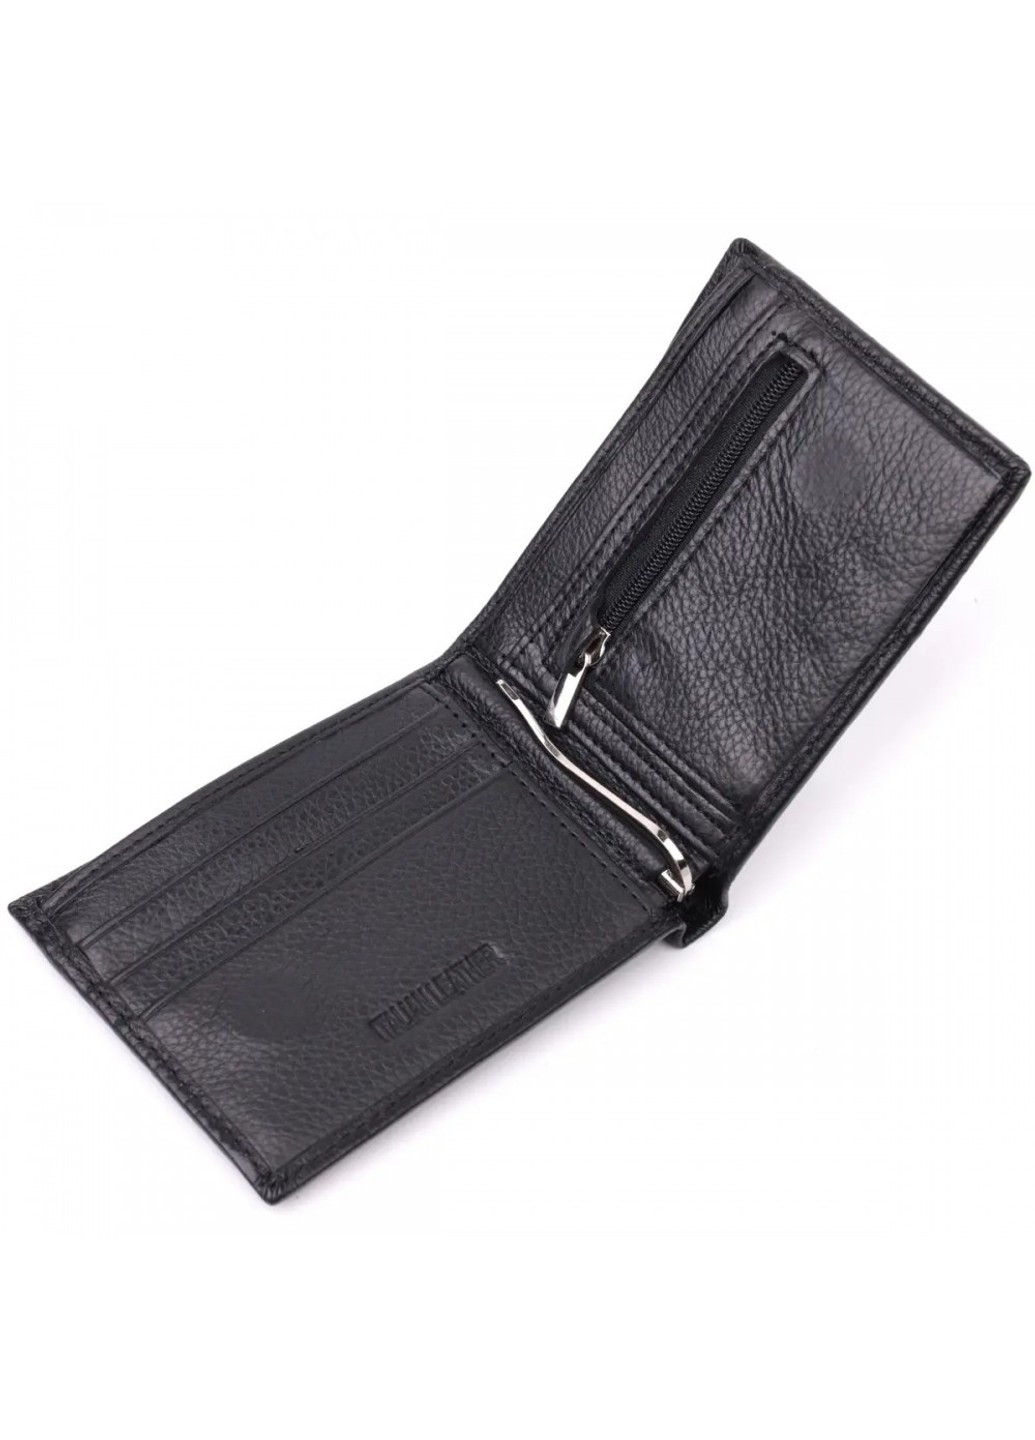 Мужской кожаный кошелек-зажим ST Leather 22460 ST Leather Accessories (277925880)